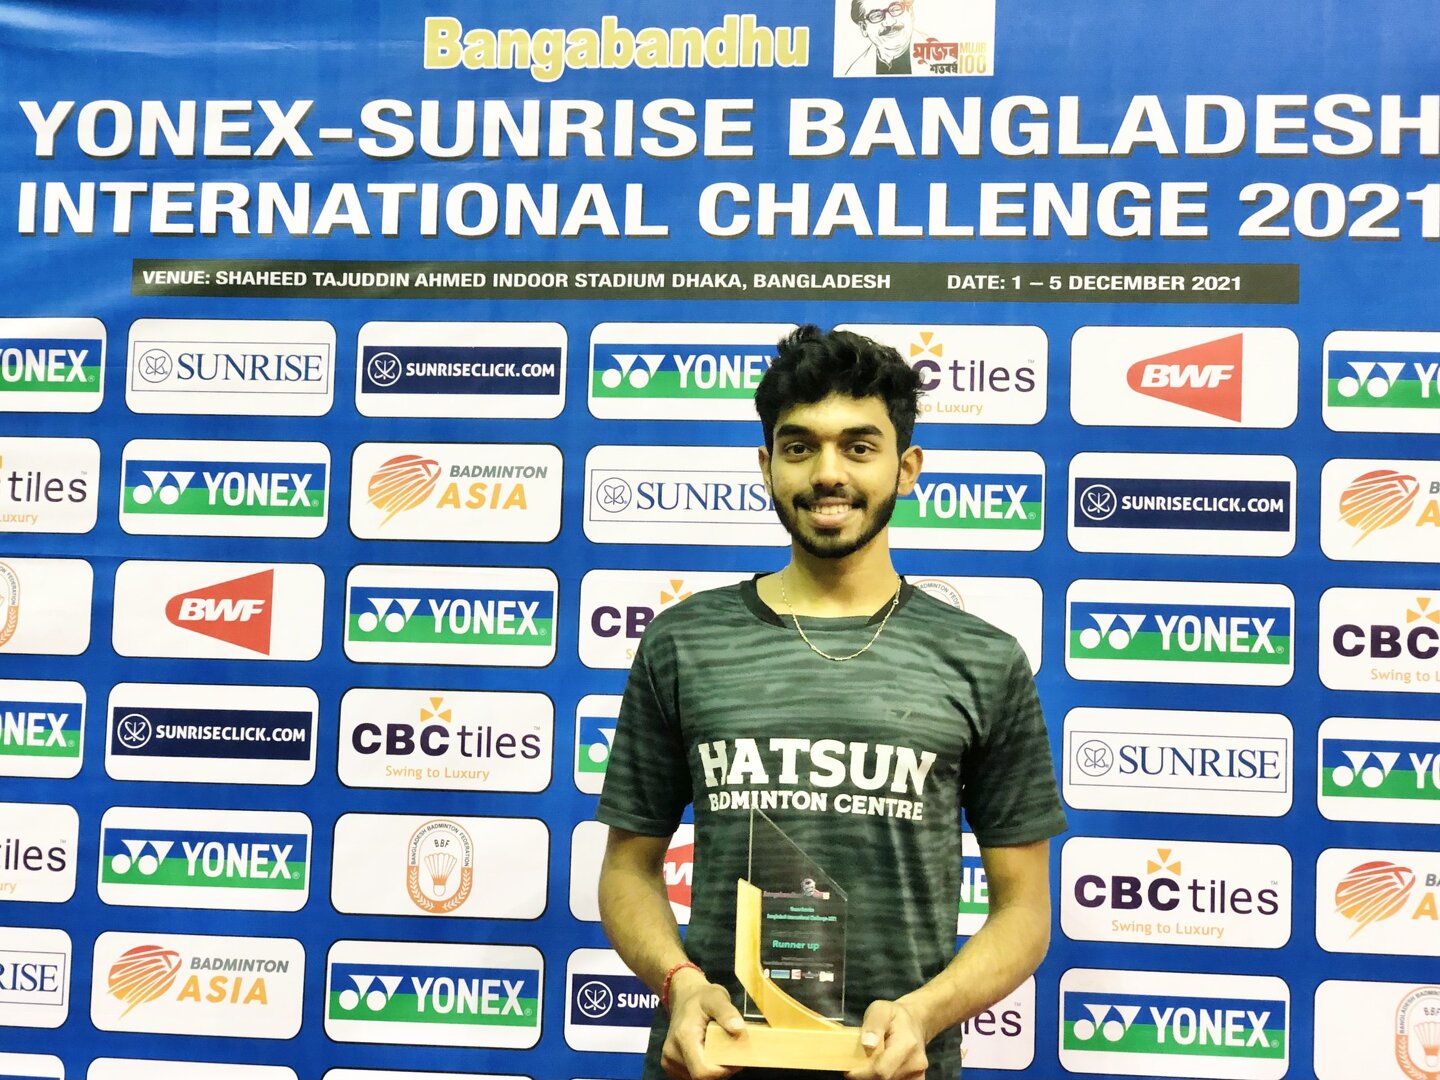 Rithvik Sanjeevi finishes runner-up at Bangladesh International Challenge